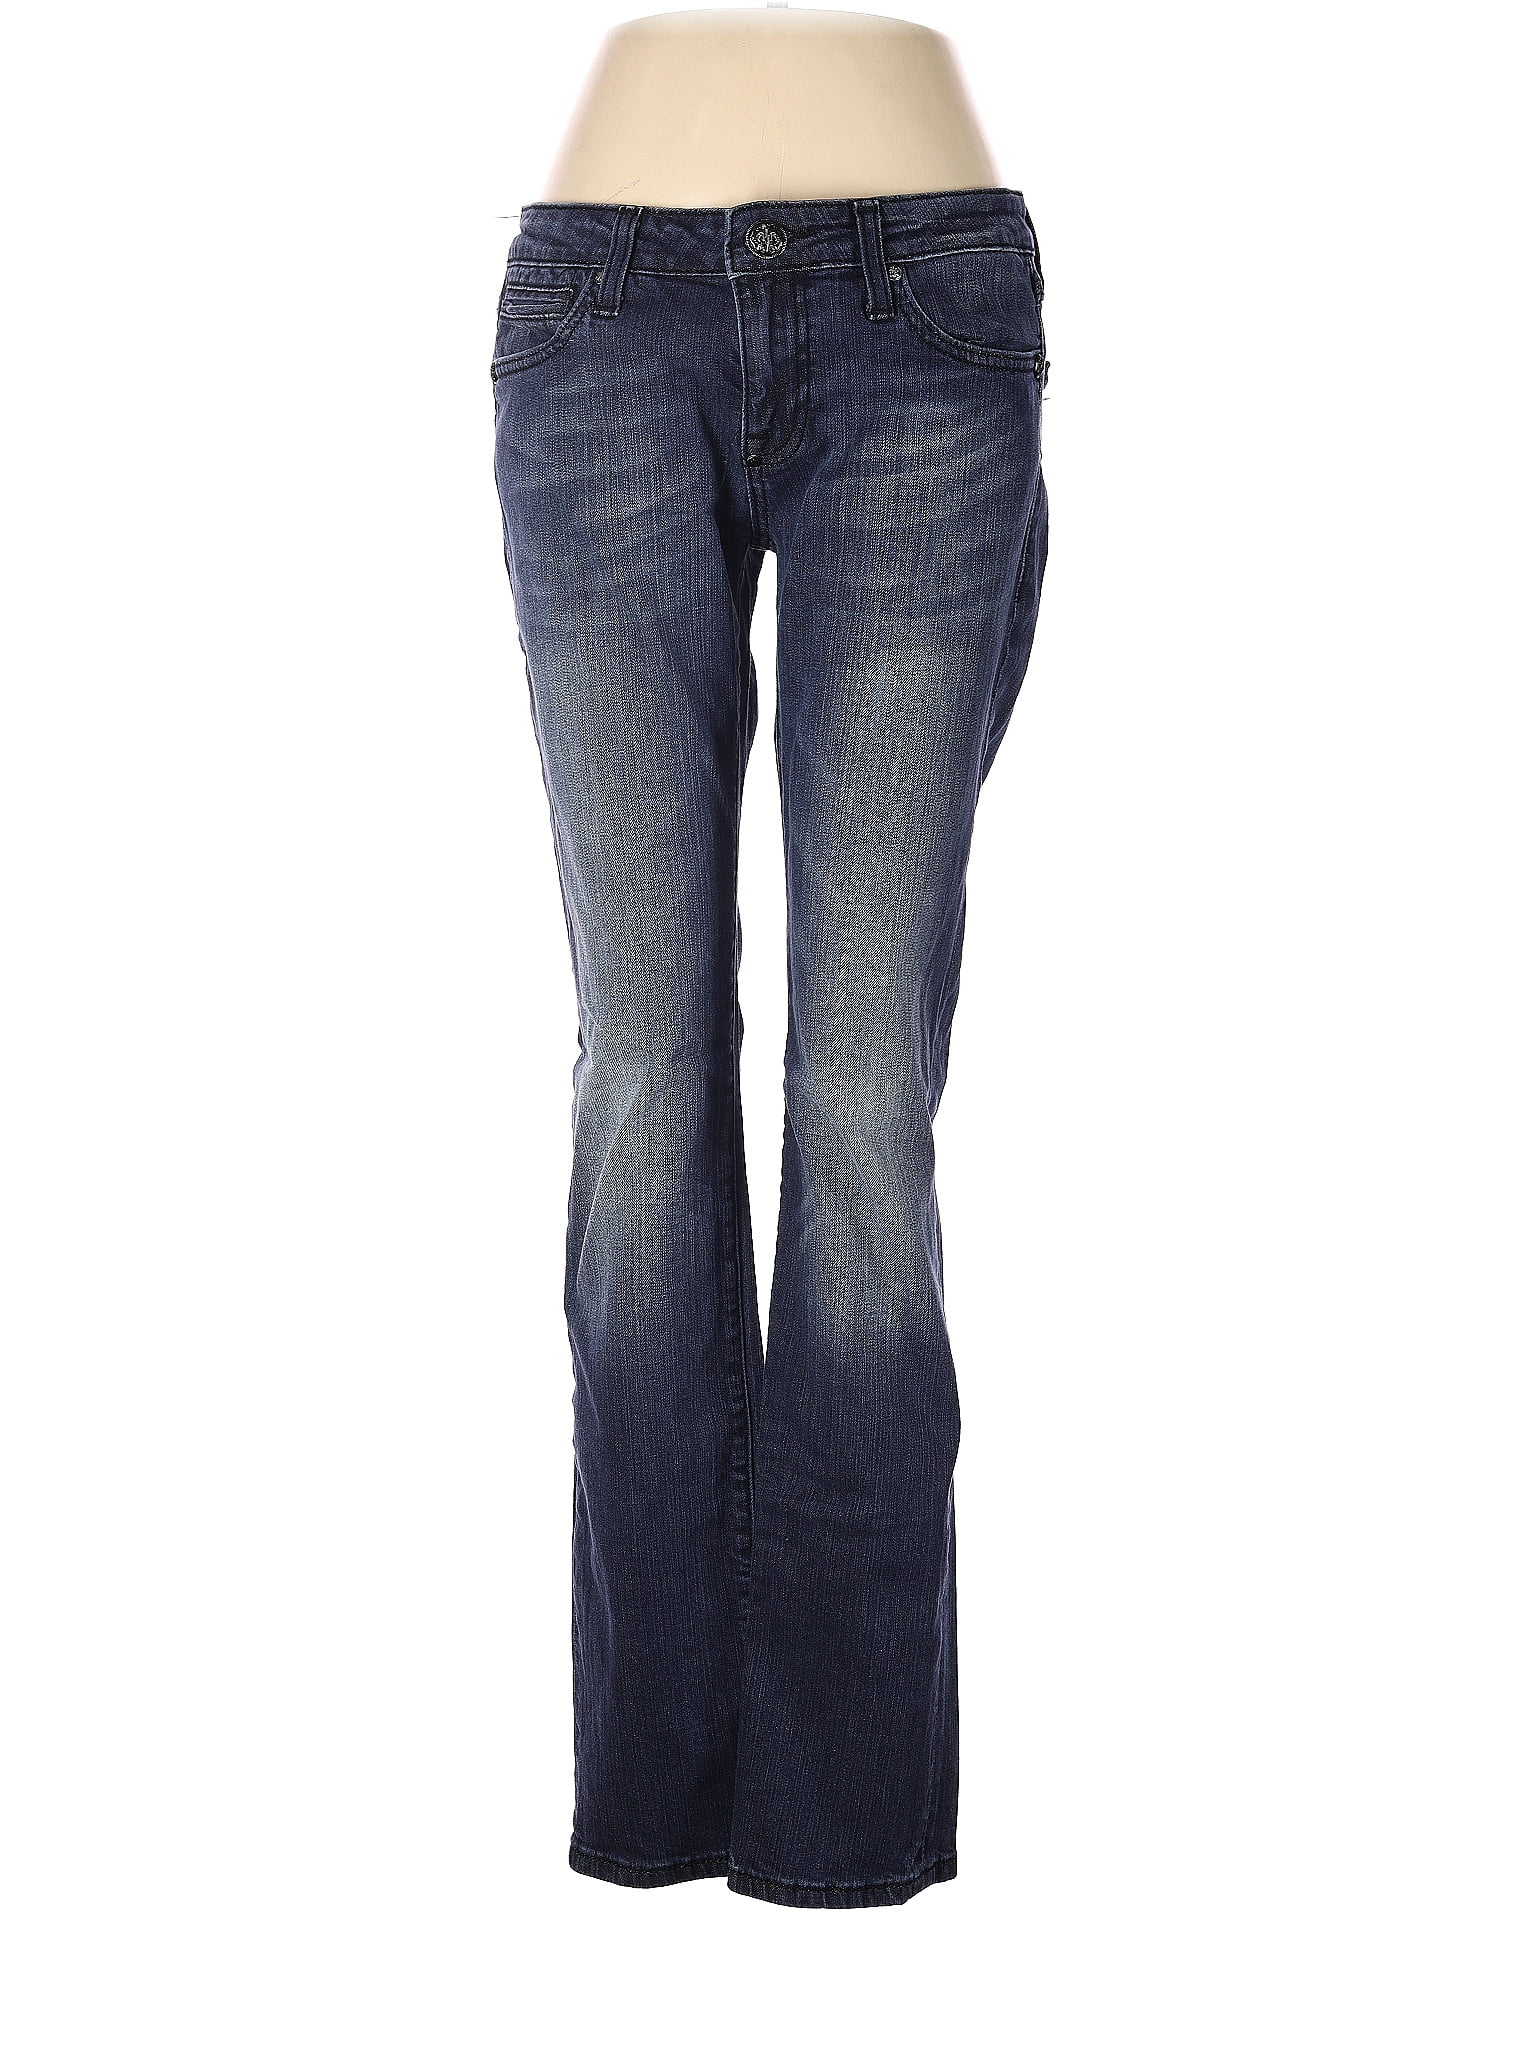 Rerock for Express Jeans Womens 6R Blue Denim Skinny Thick Stitch 31x32